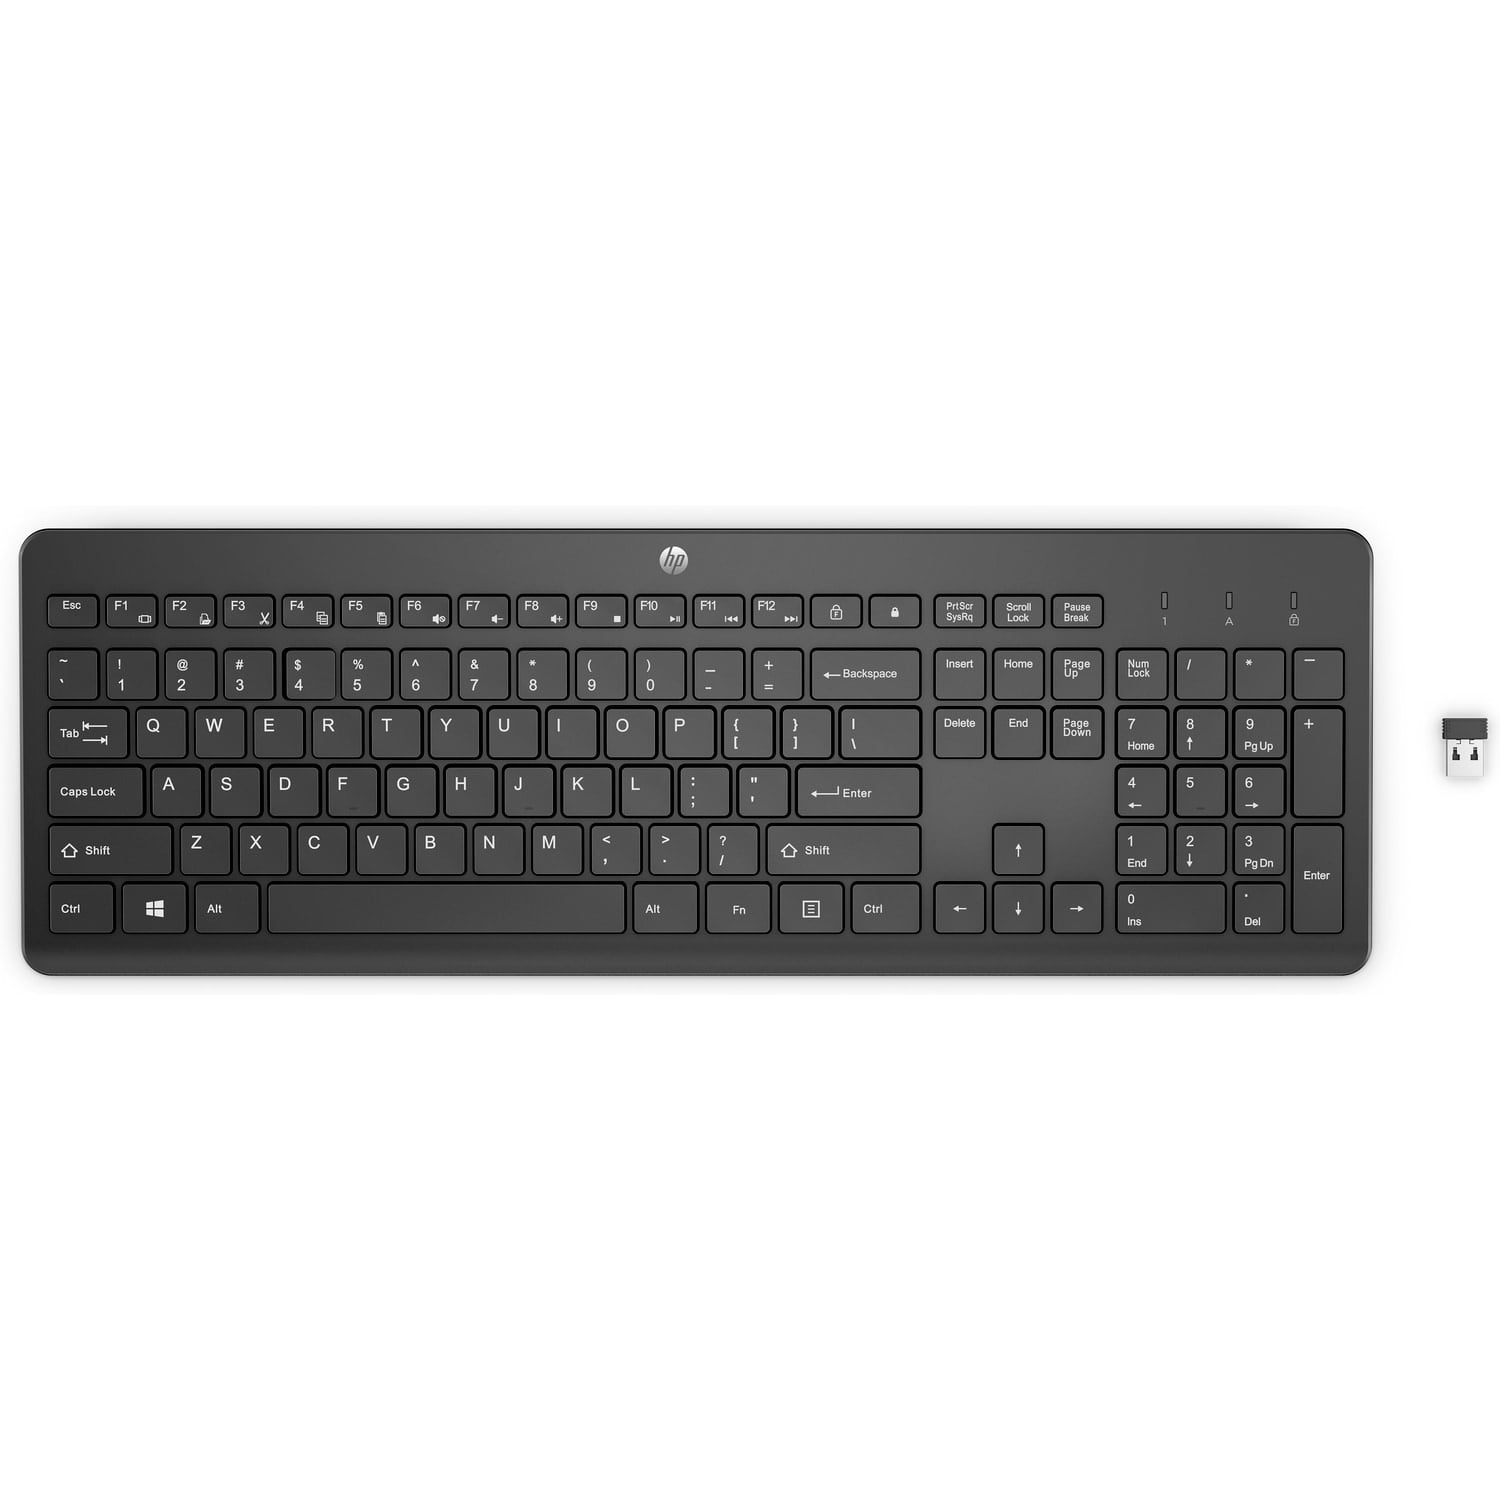 onn. Wireless Silent Full Size Keyboard, Windows & Mac Compatible